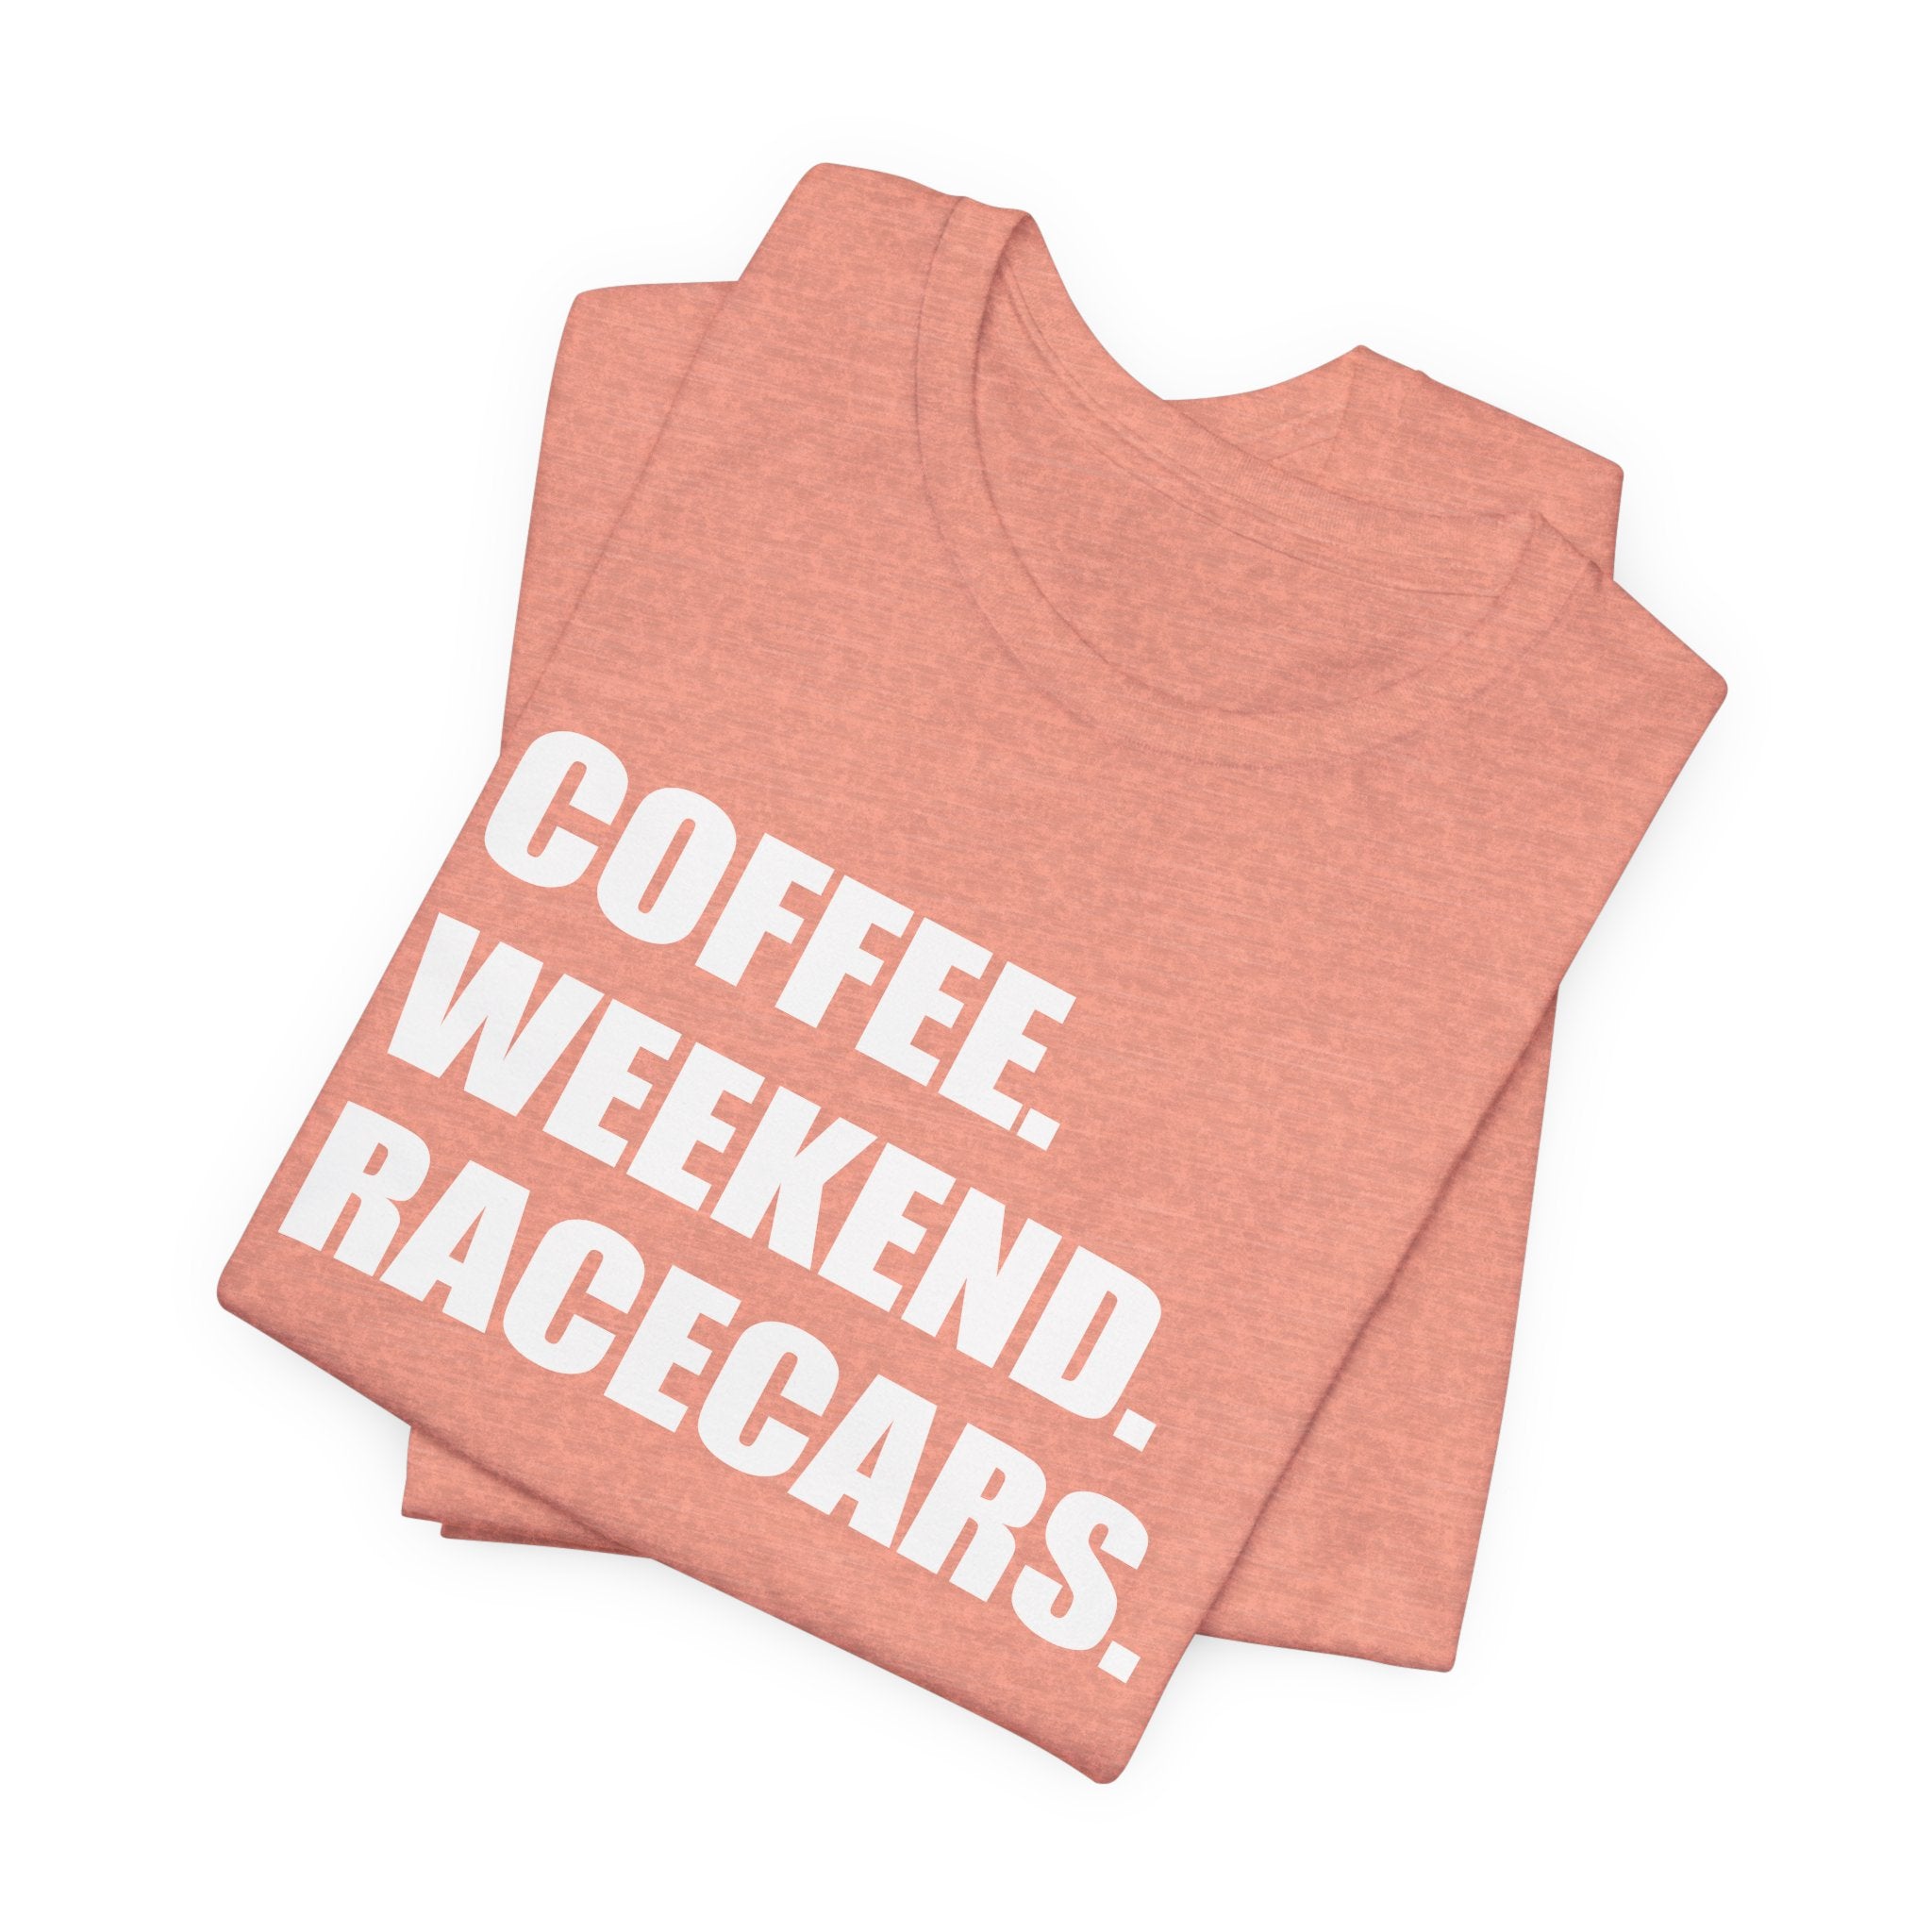 Coffee Weekend Racecars Unisex Raceday T-Shirt for Women